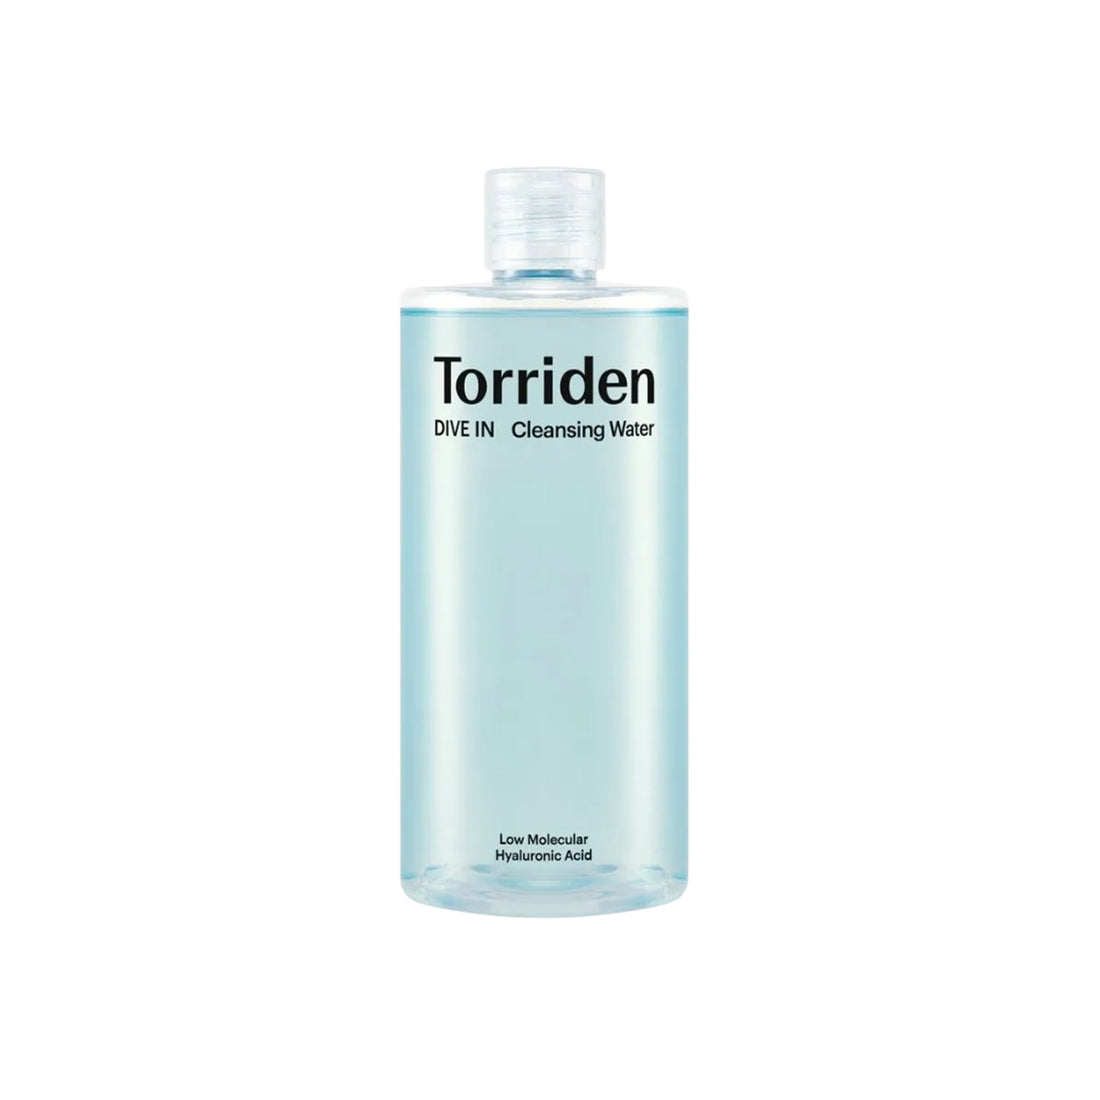 Torriden Dive In Low Molecular Hyaluronic Acid Cleansing Water